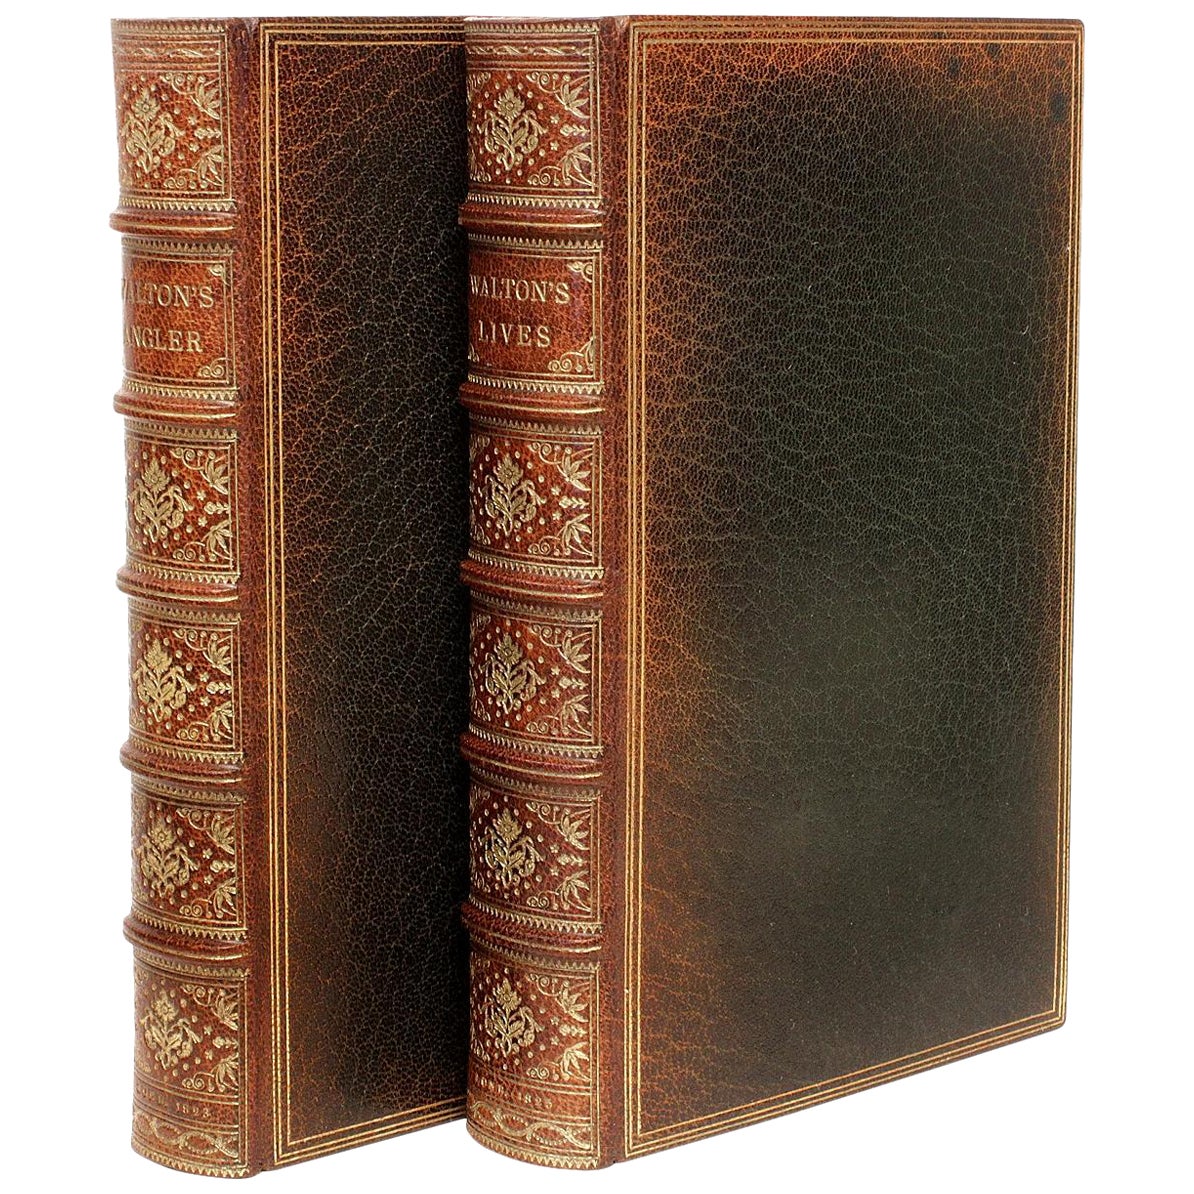 Izaak Walton, Complete Angler & Lives of John Donne - First John Major Editions For Sale